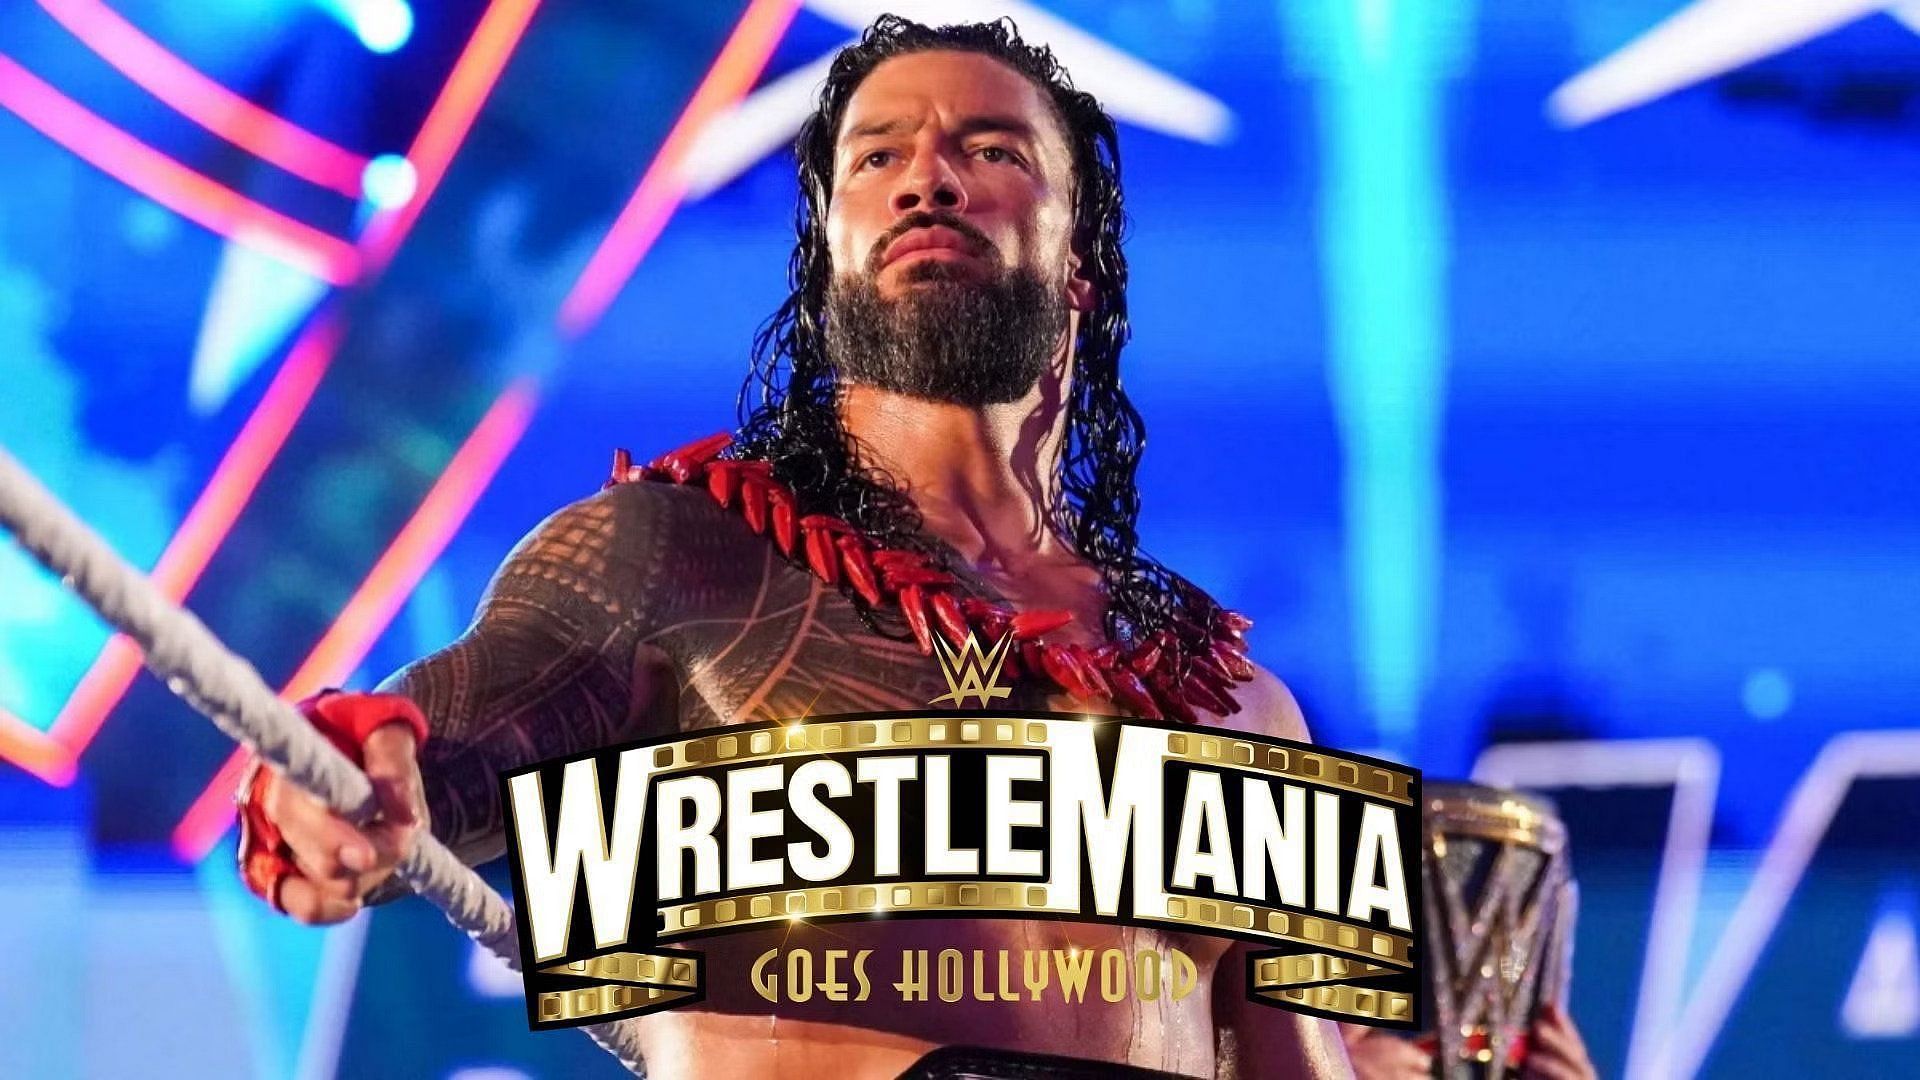 Roman Reigns will main event WrestleMania again